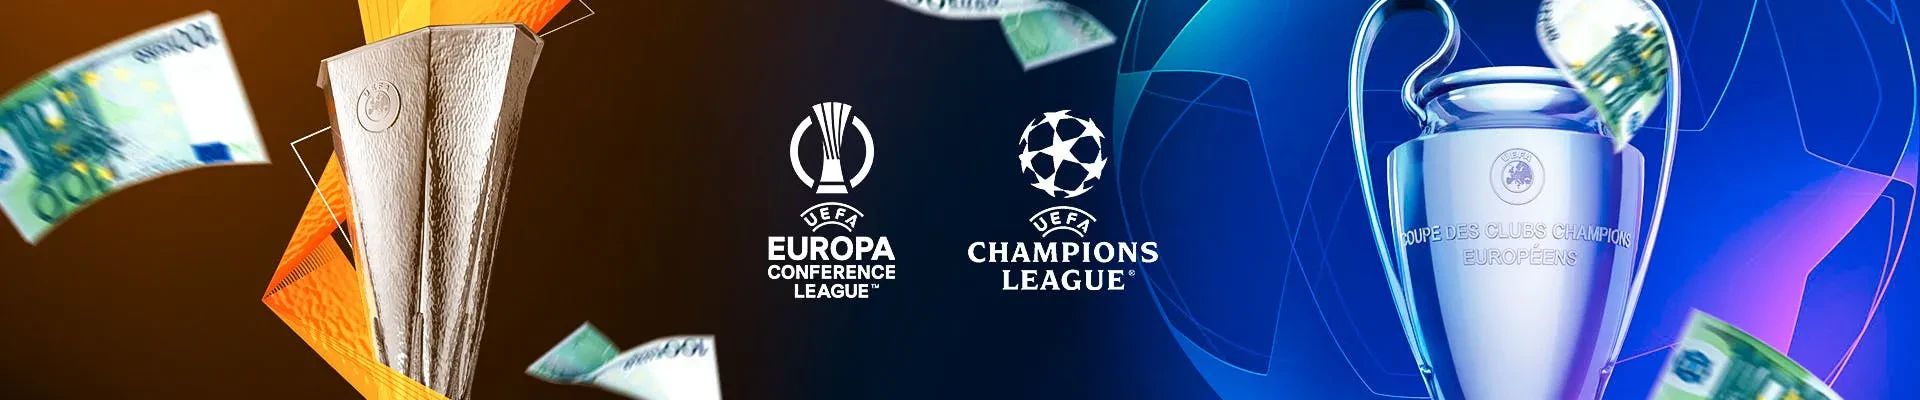 europa conference league 2